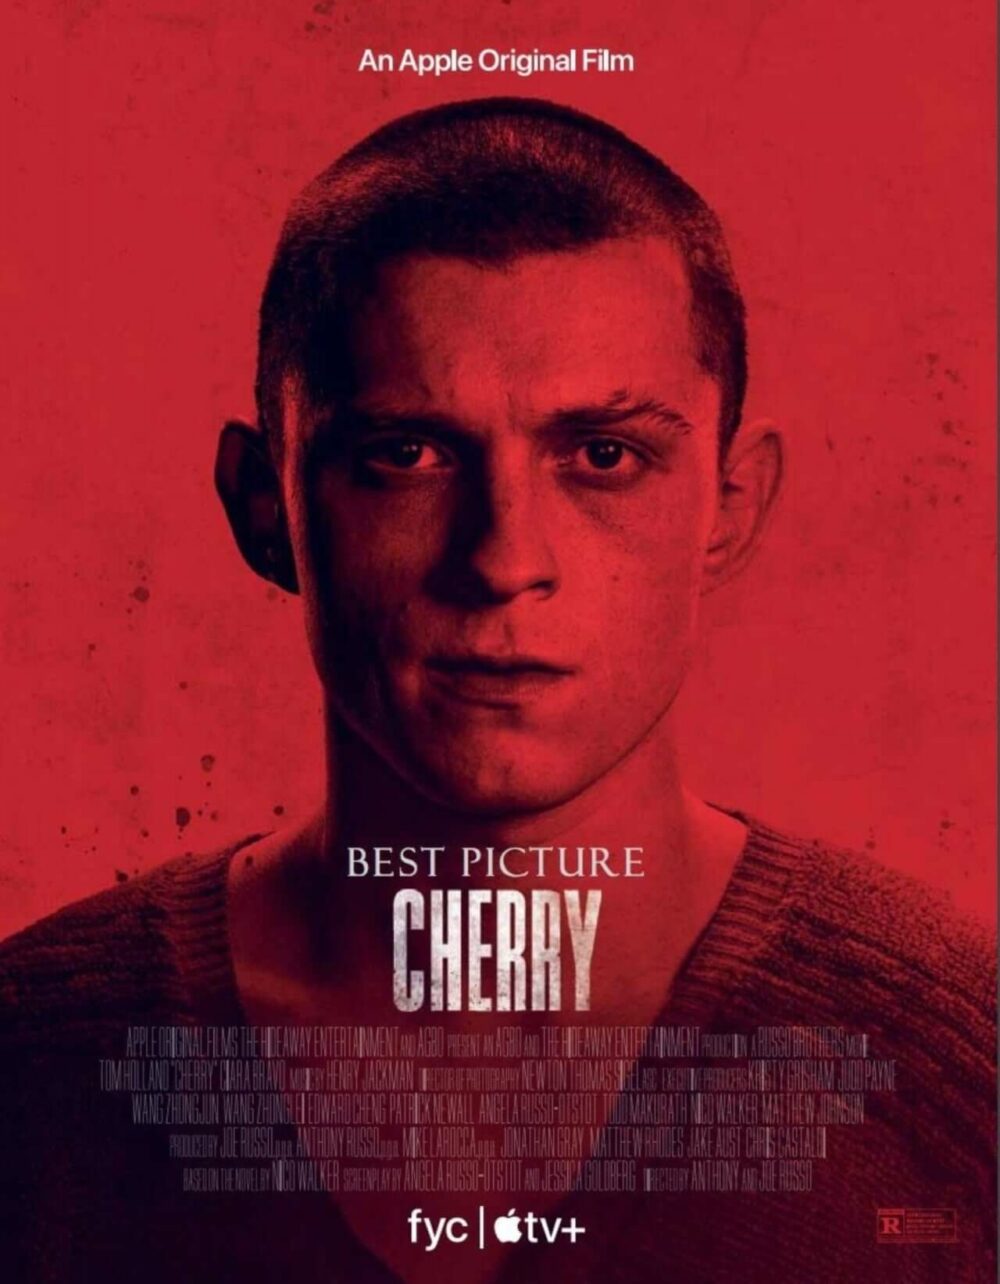 "Cherry" film poster